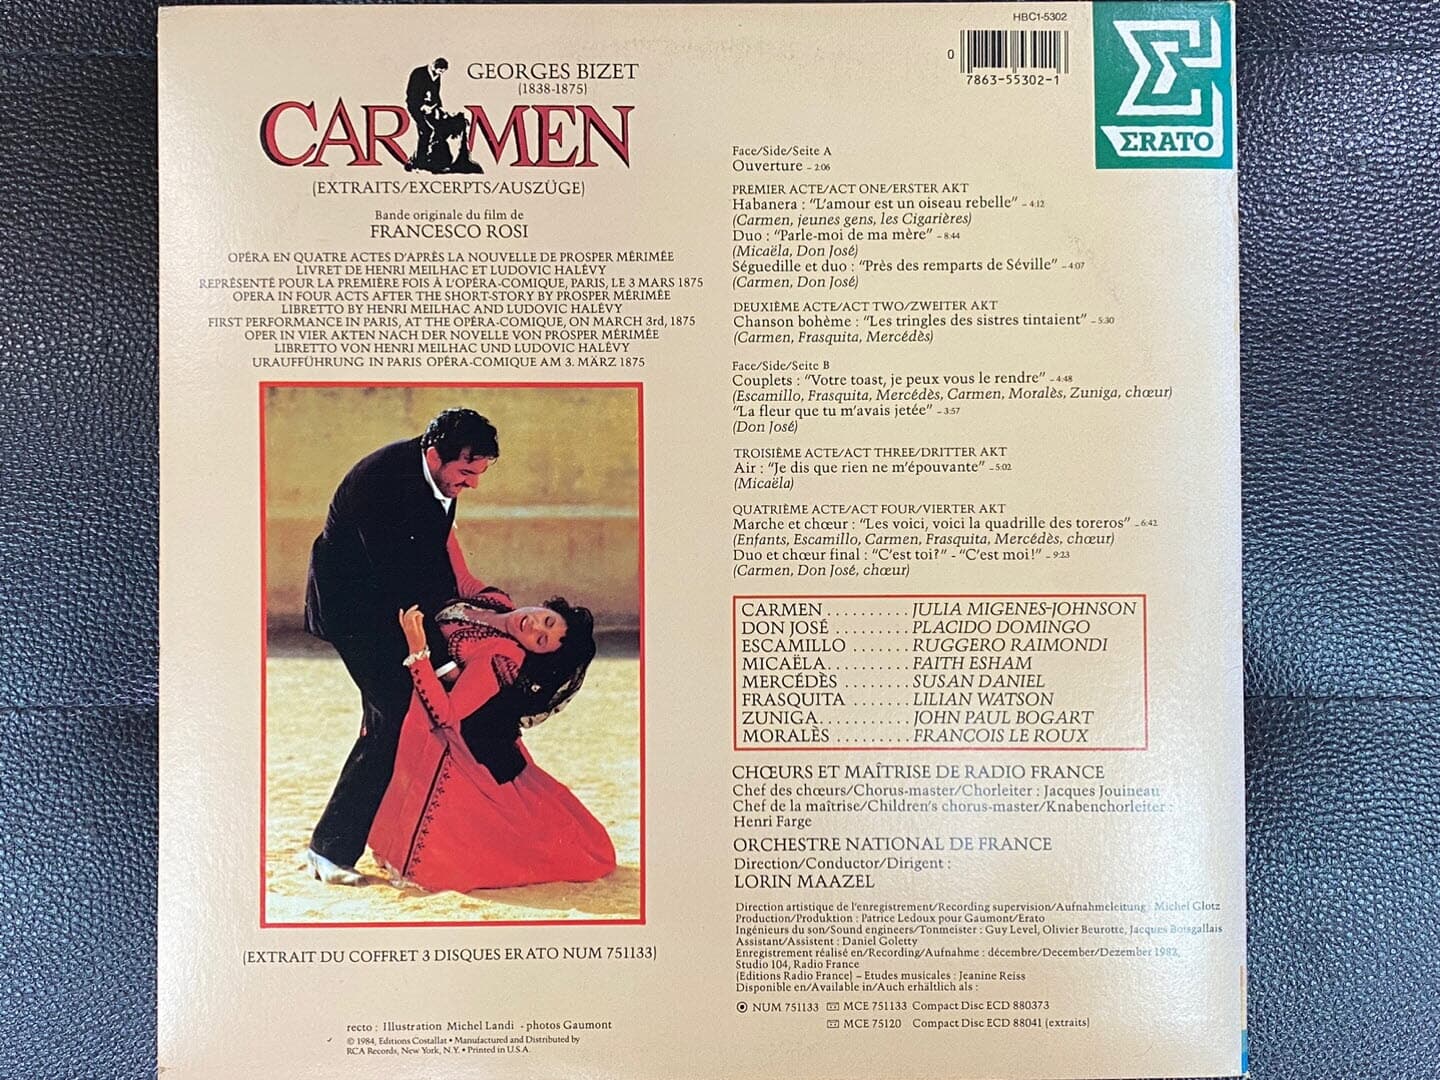 [LP] 플라시도 도밍고 - Placido Domingo - Bizet Carmen LP [U.S반]